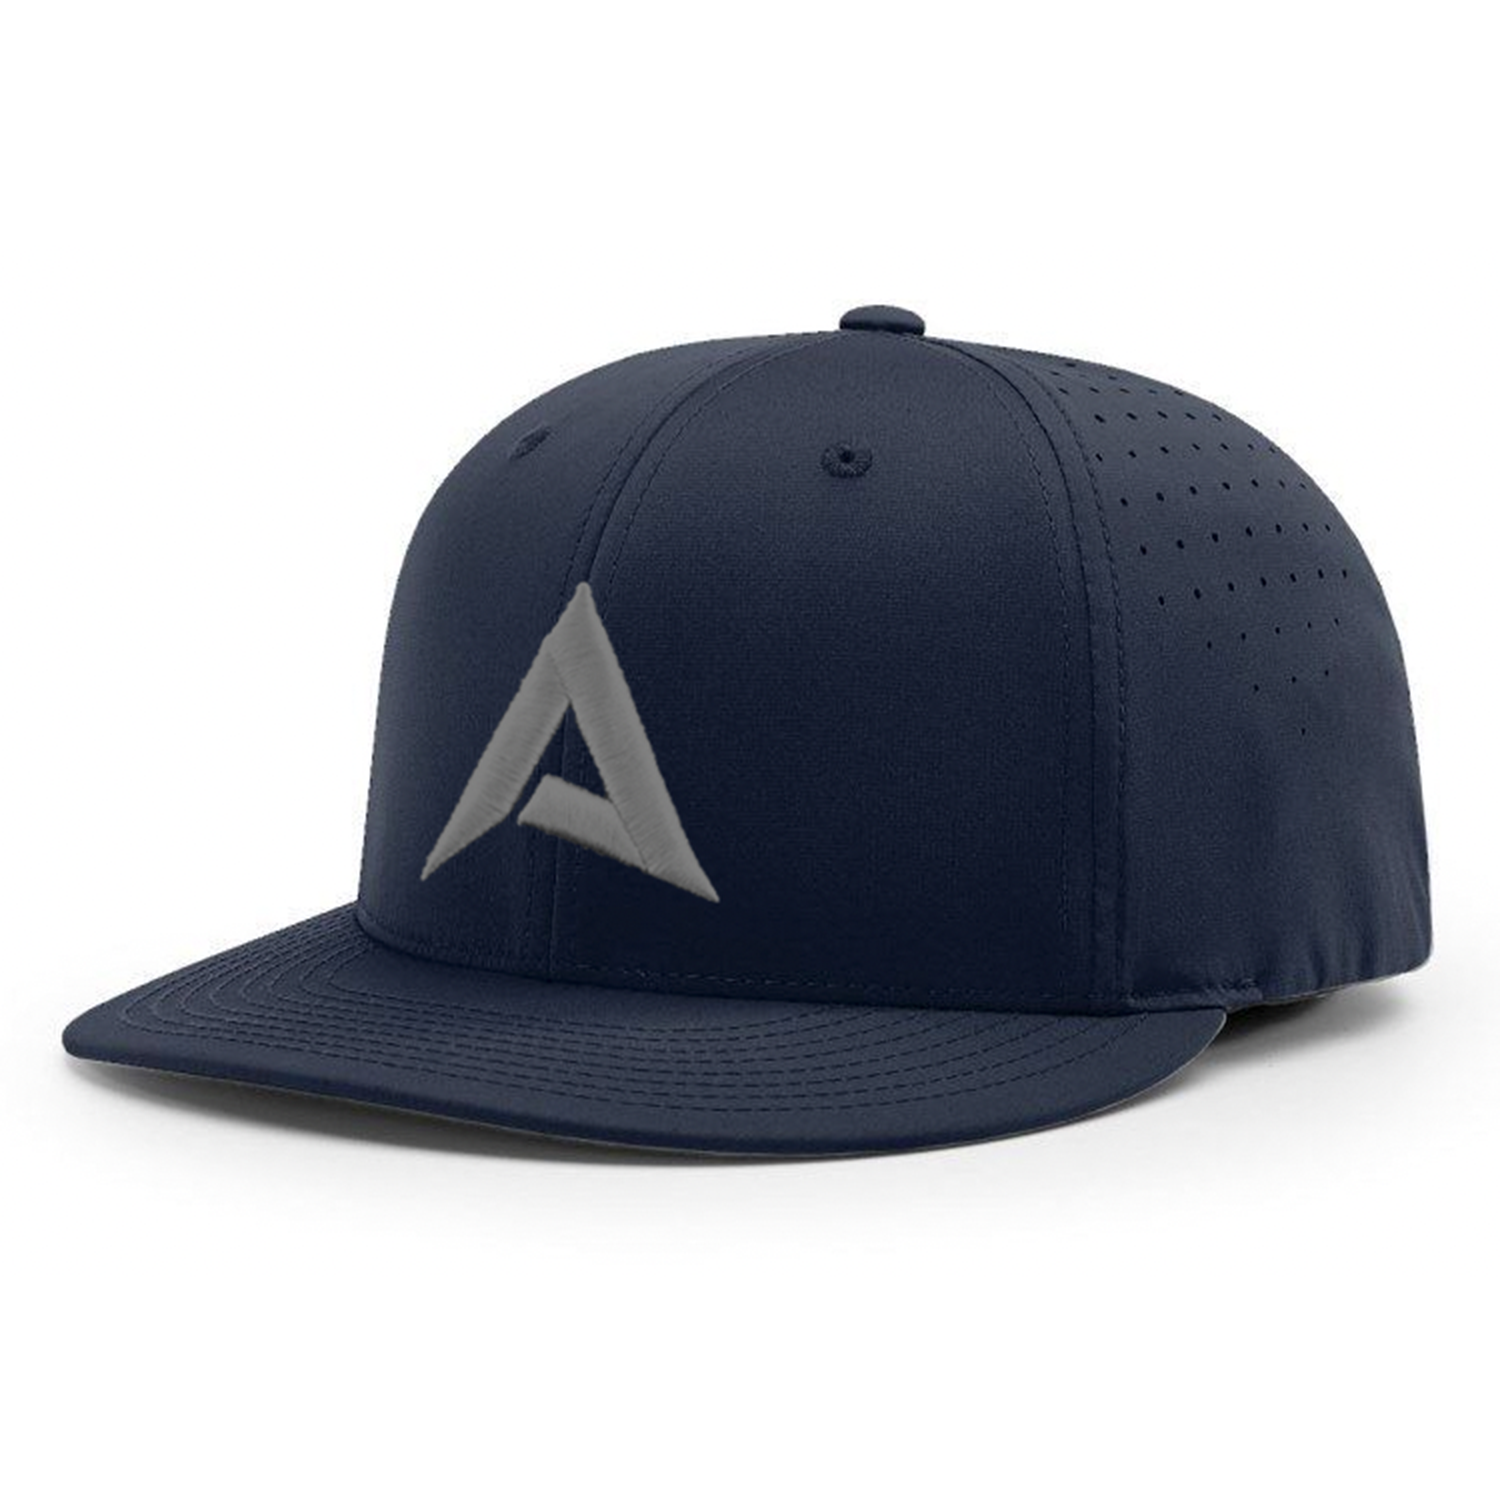 Anarchy CA i8503 Performance Hat - New Logo - Navy/Grey